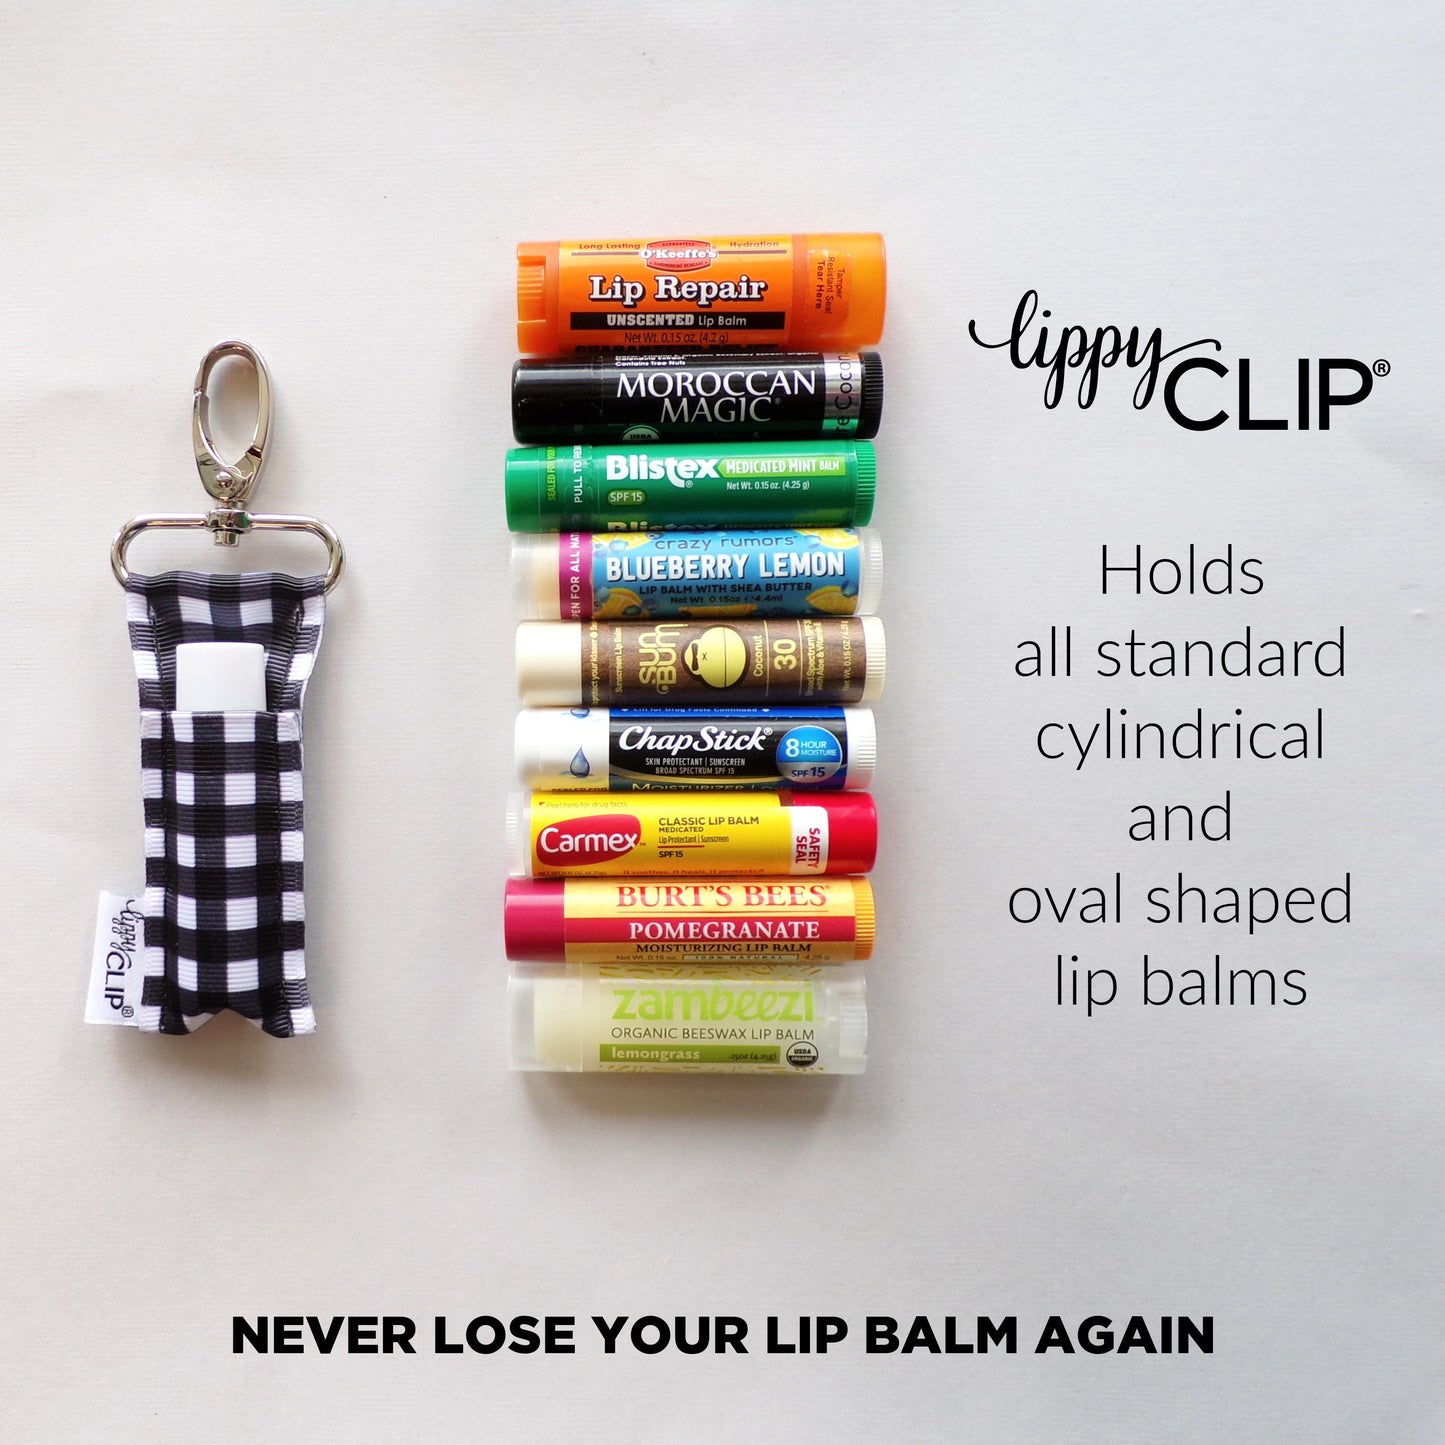 Dolphins LippyClip® Lip Balm Holder